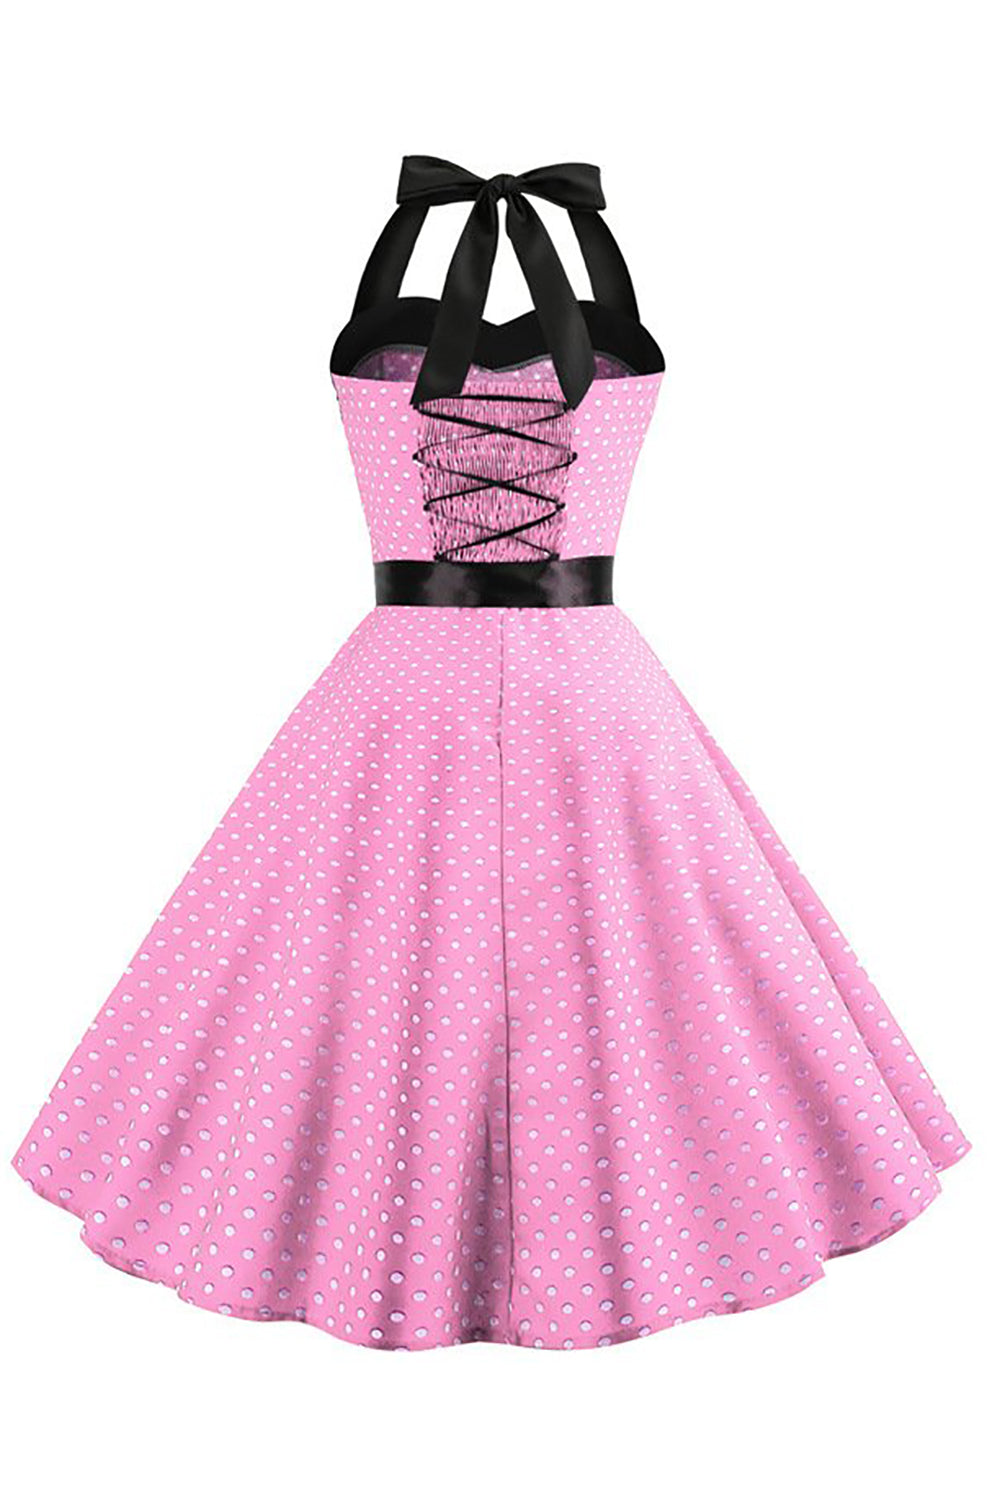 Pink Polka Dots Halter 1950s Dress With Bowknot